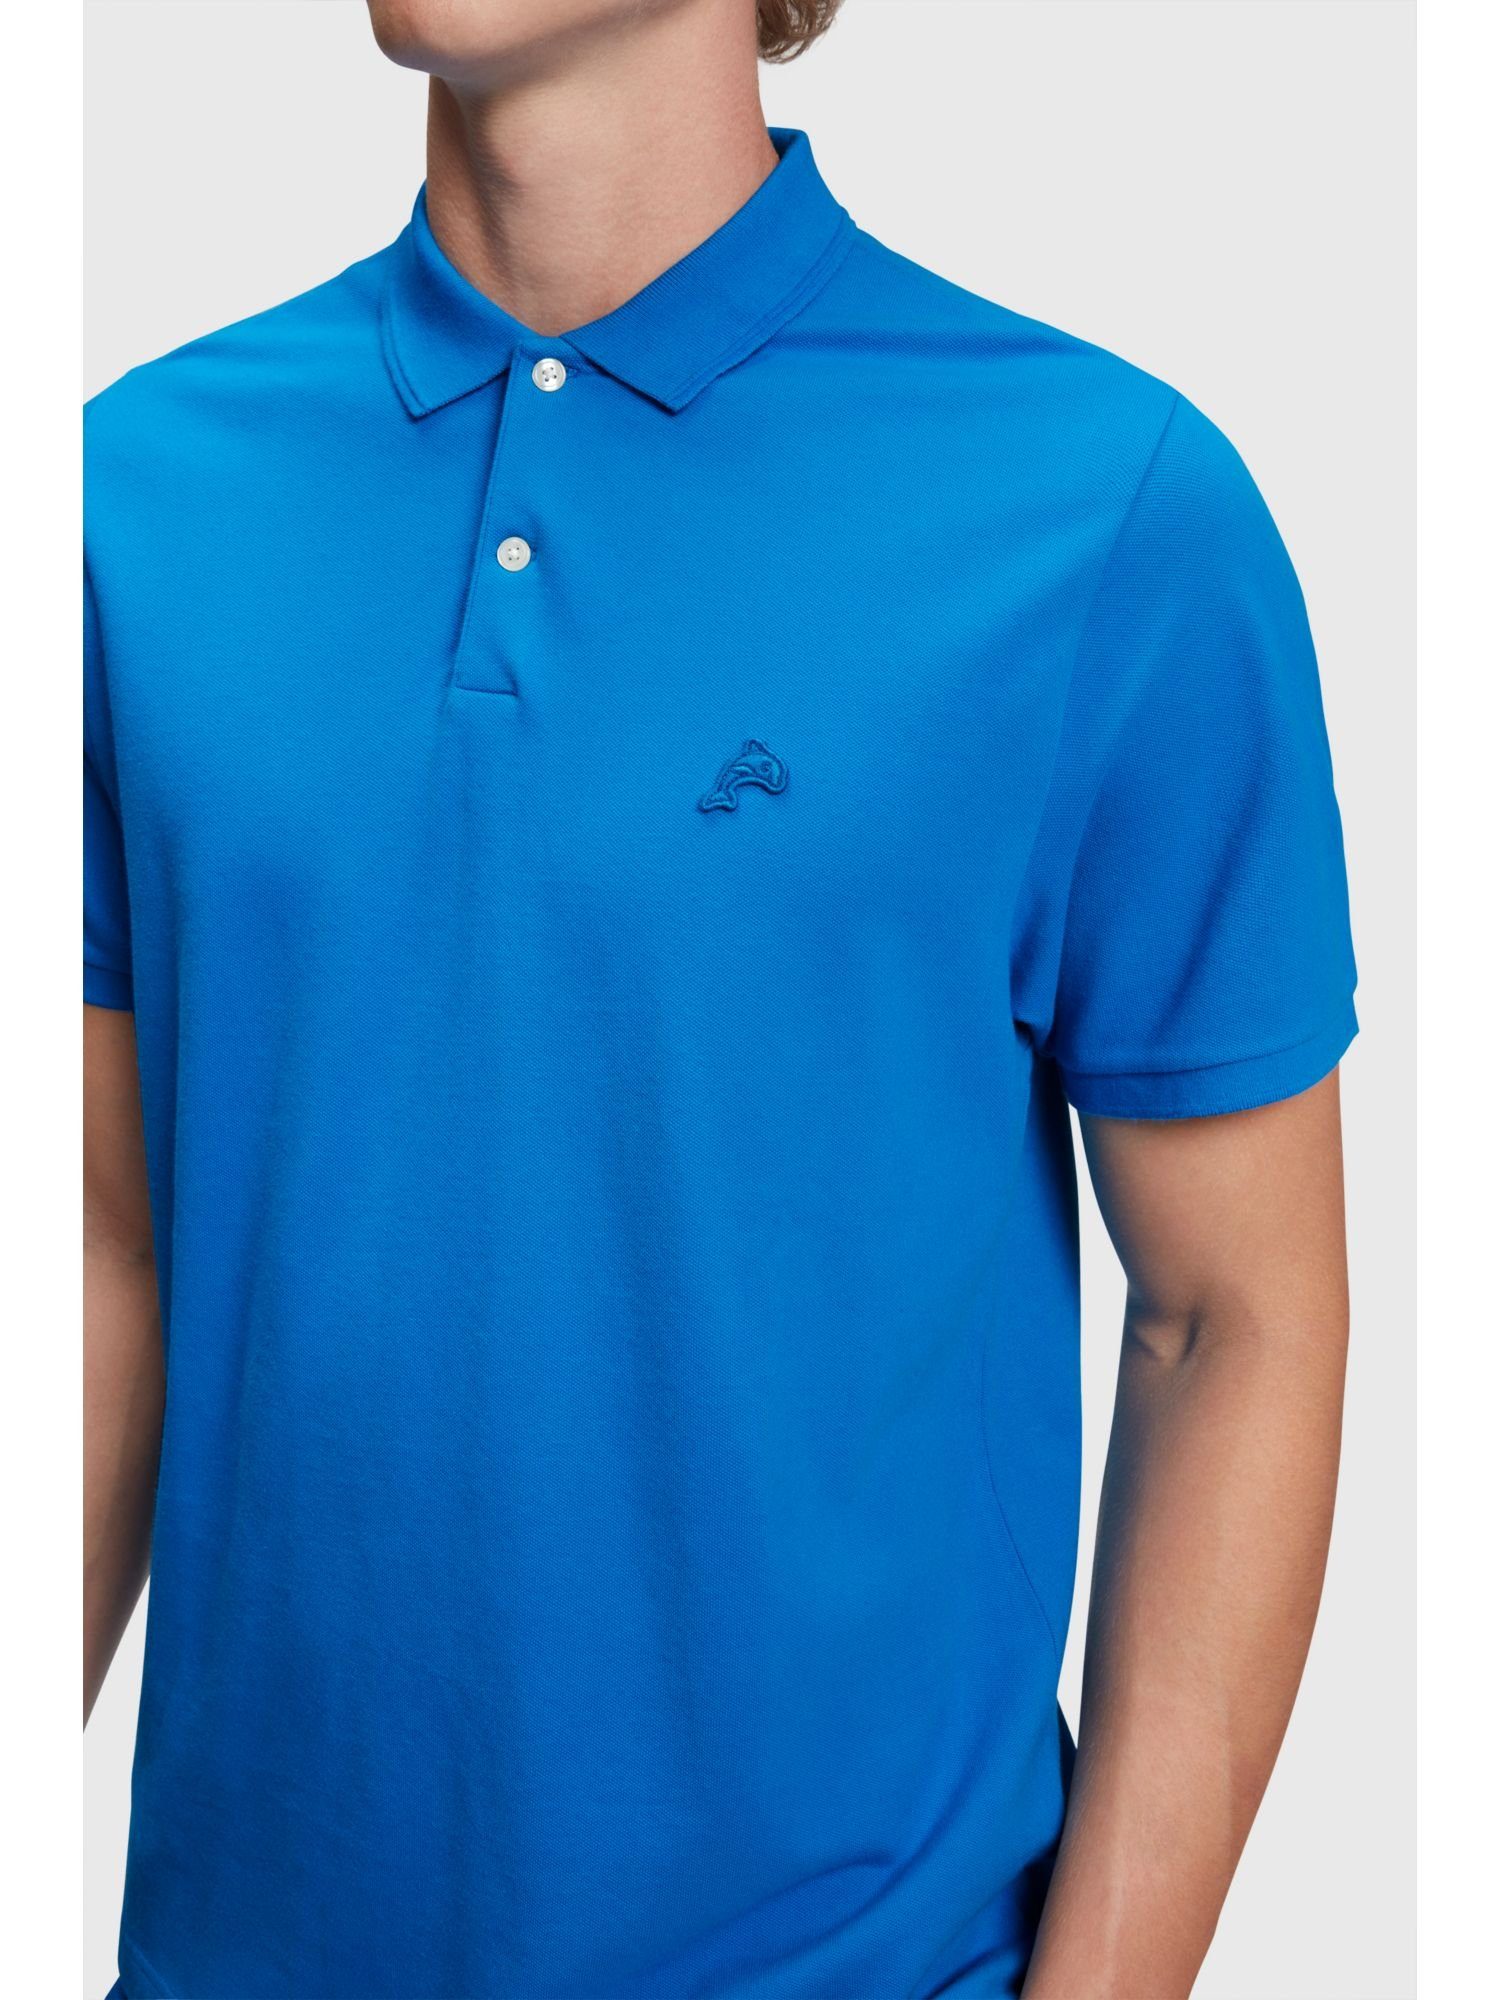 Esprit Poloshirt Klassisches Tennis-Poloshirt mit BLUE Dolphin-Batch